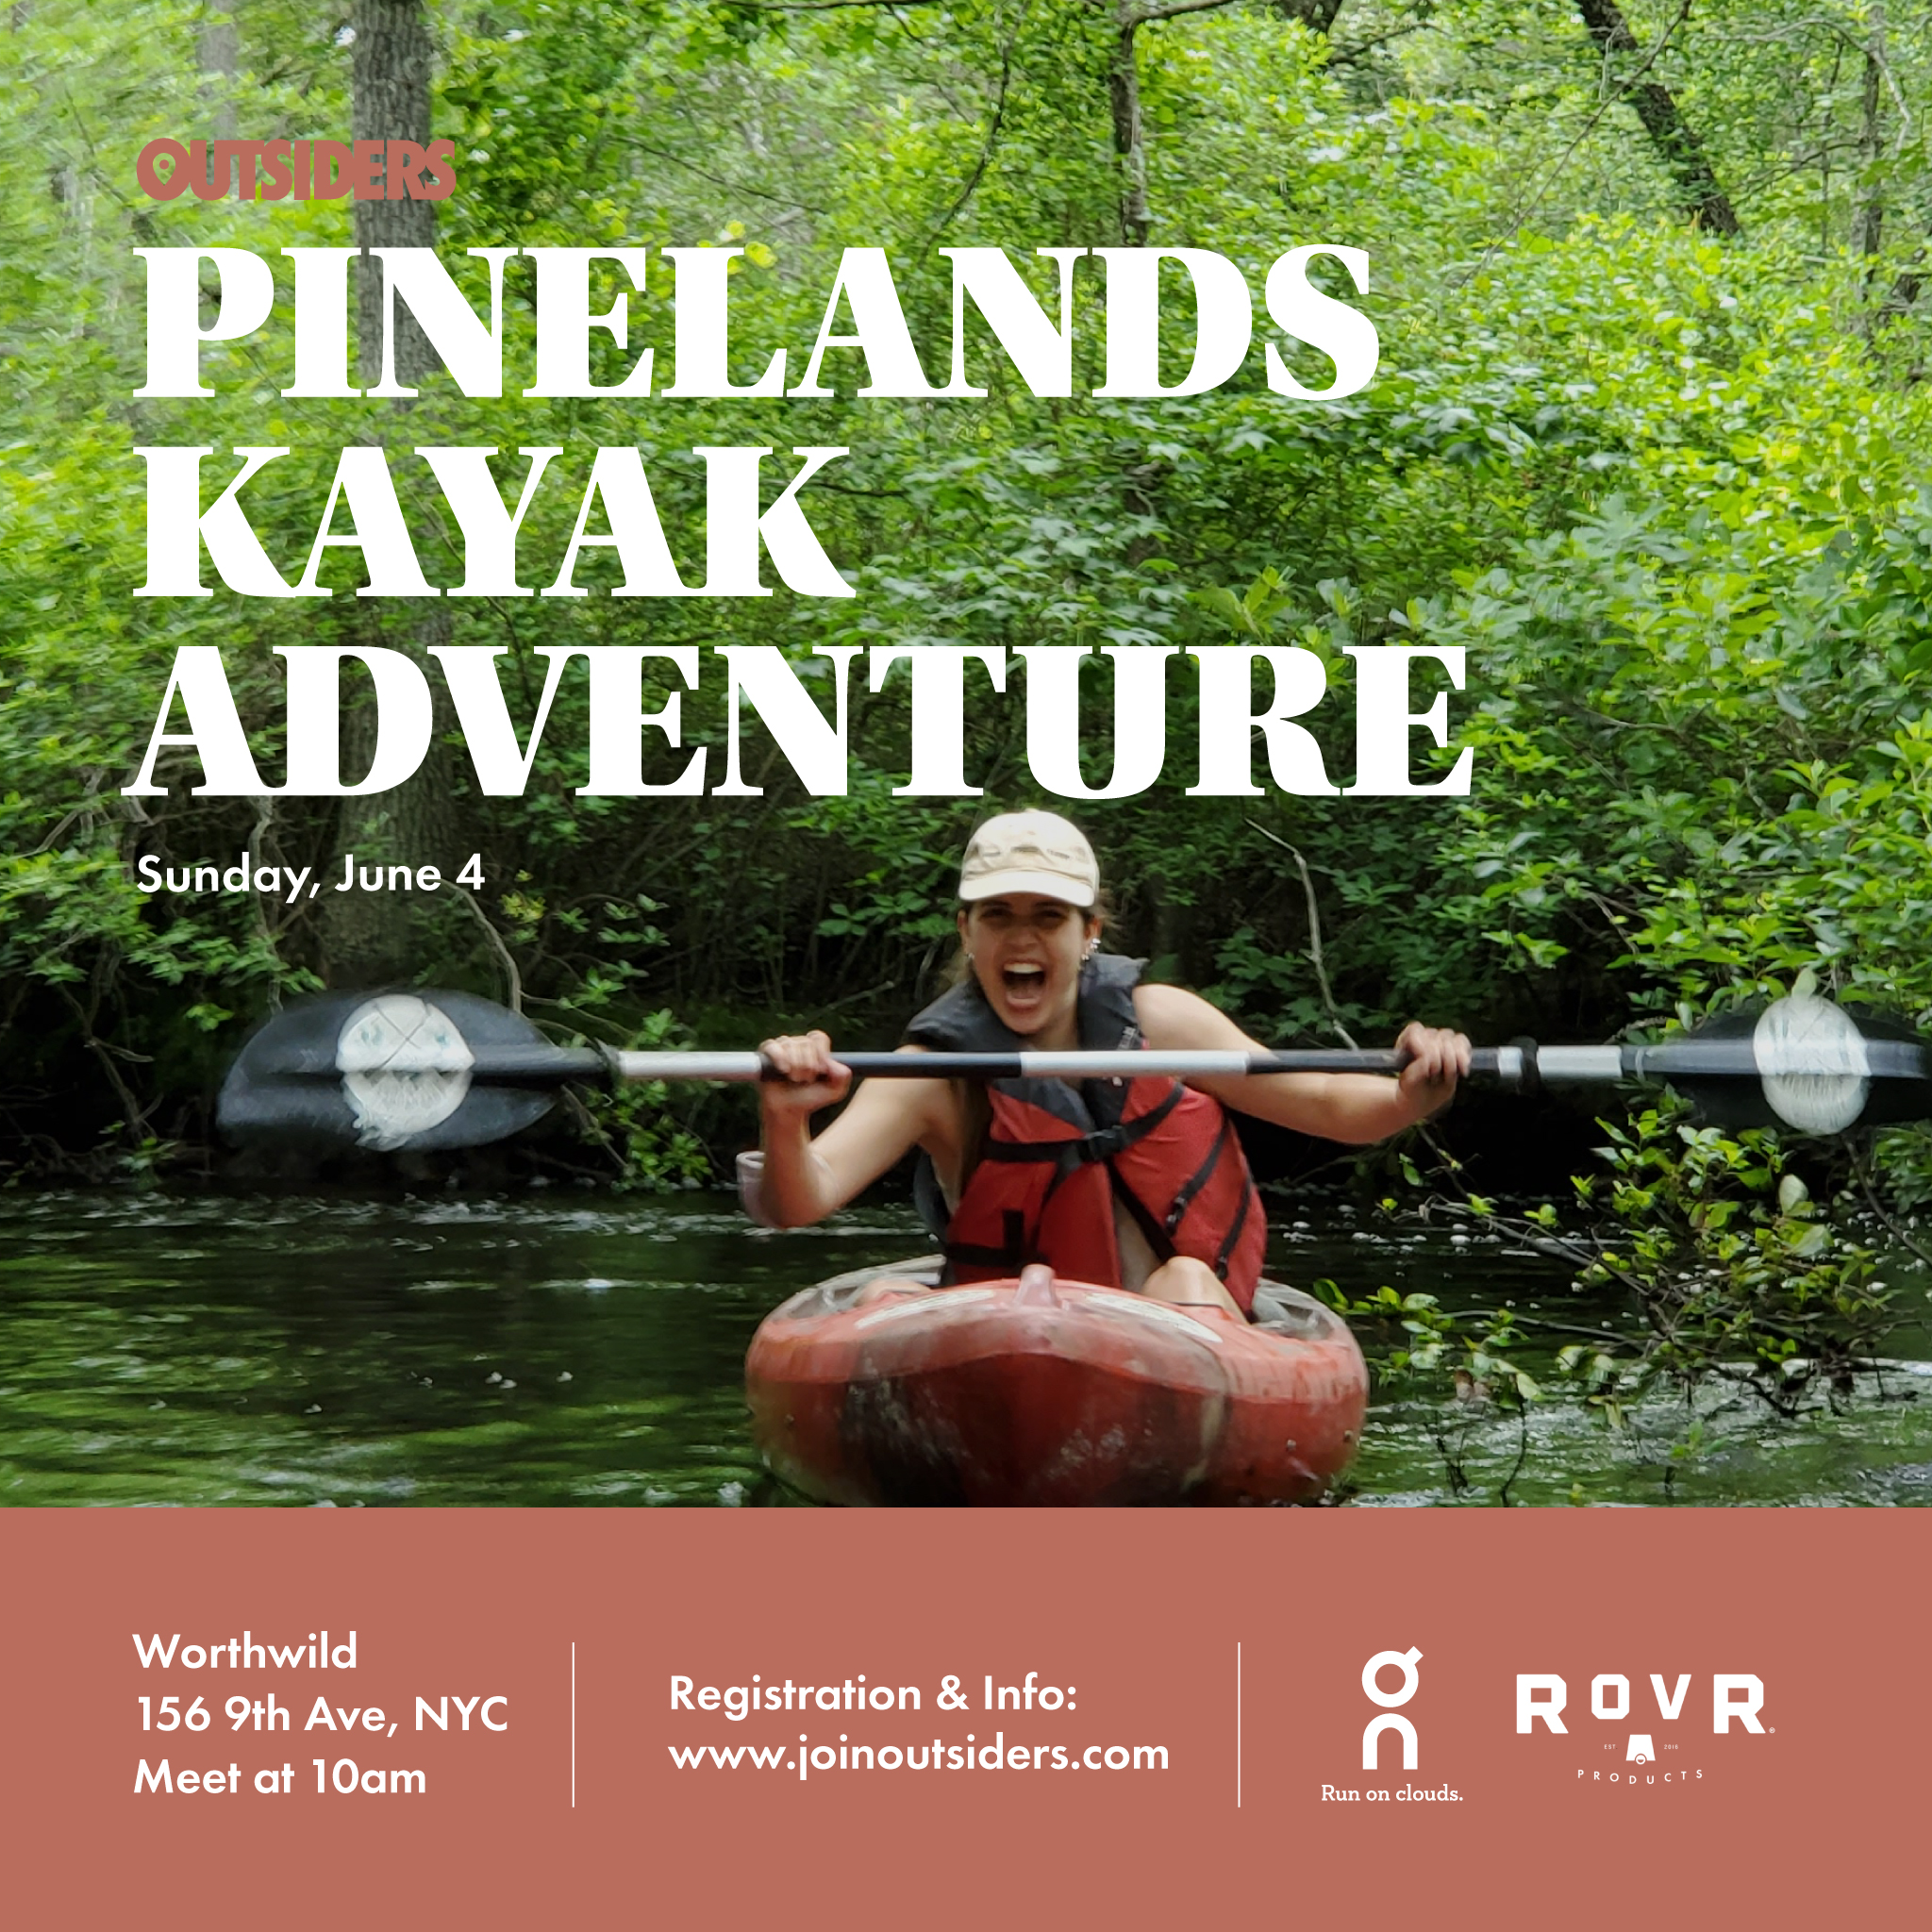 Pinelands Kayaking Adventure Sunday